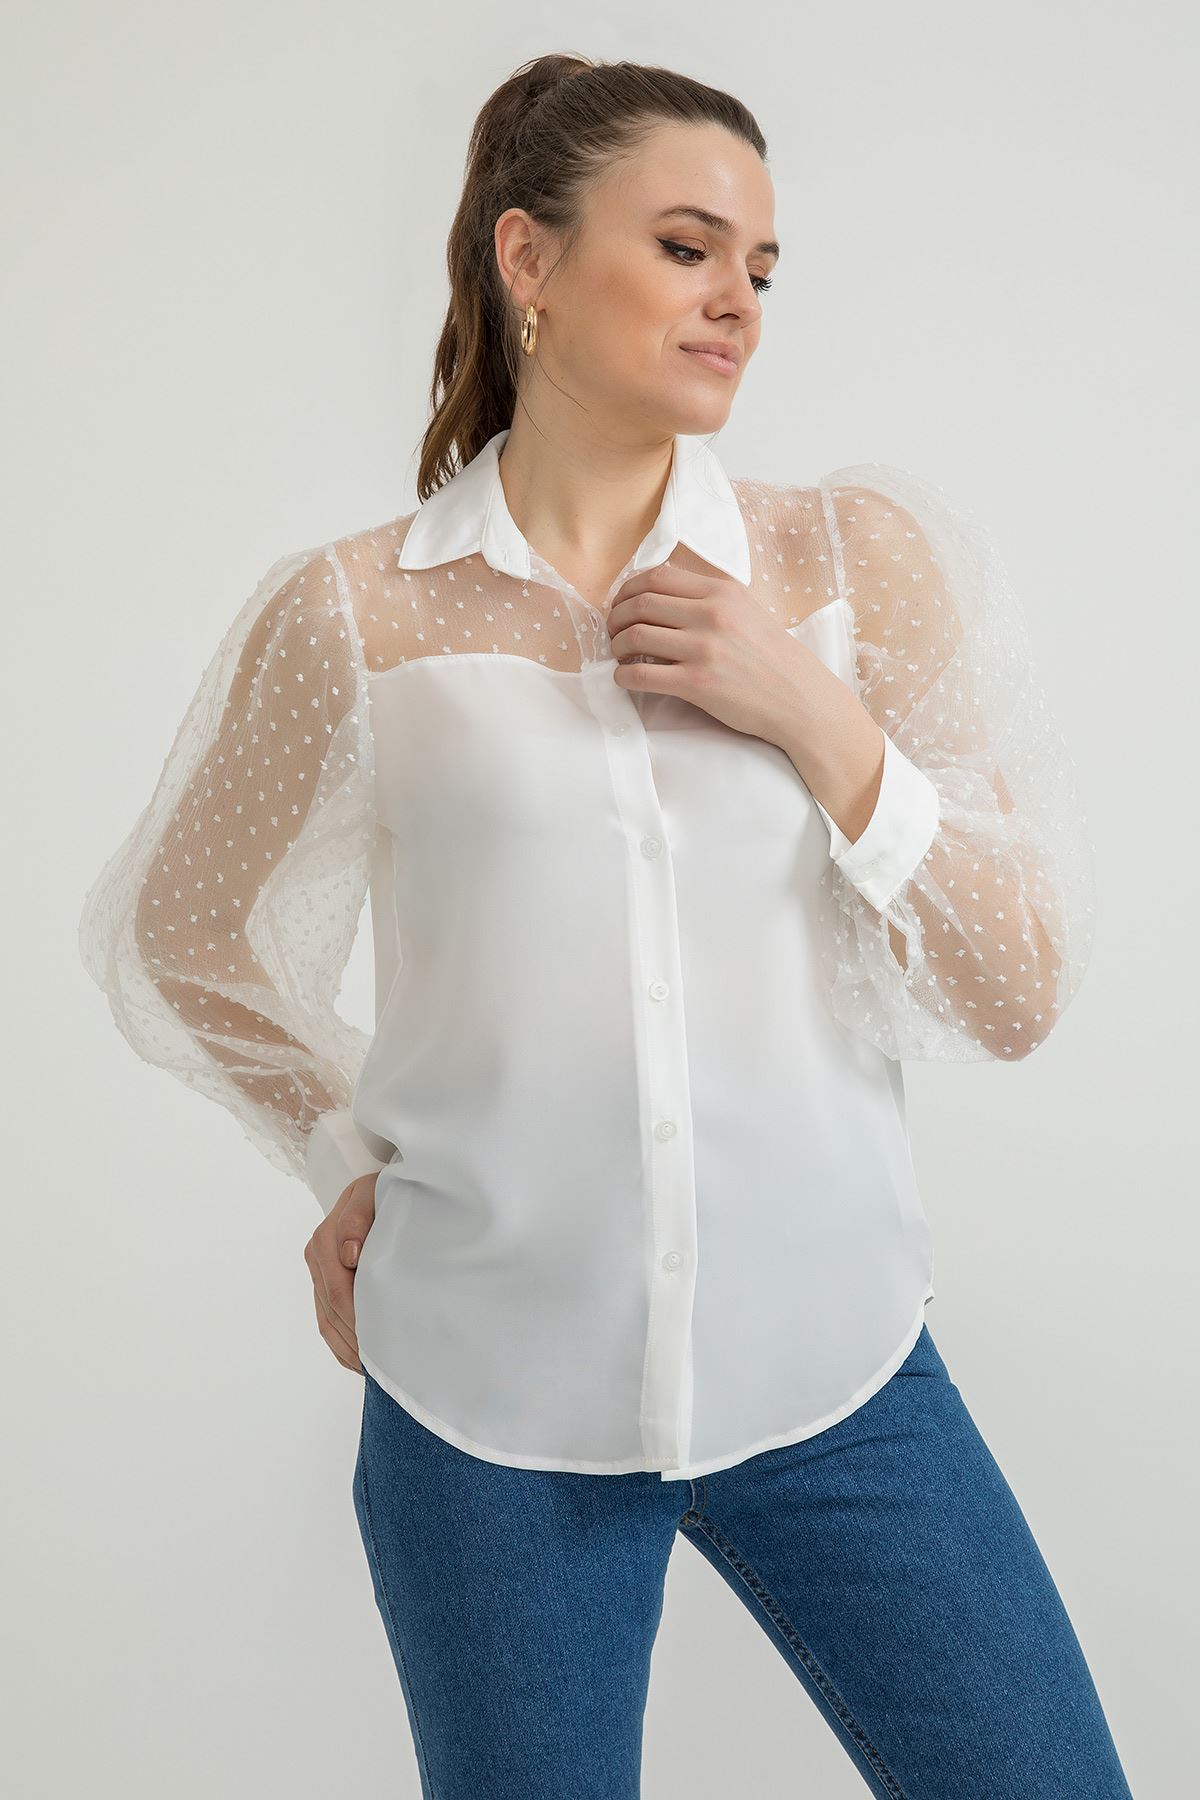 Organze Fabric Long Sleeve Hip Height Classical Polka-Dot Women'S Shirt - Ecru